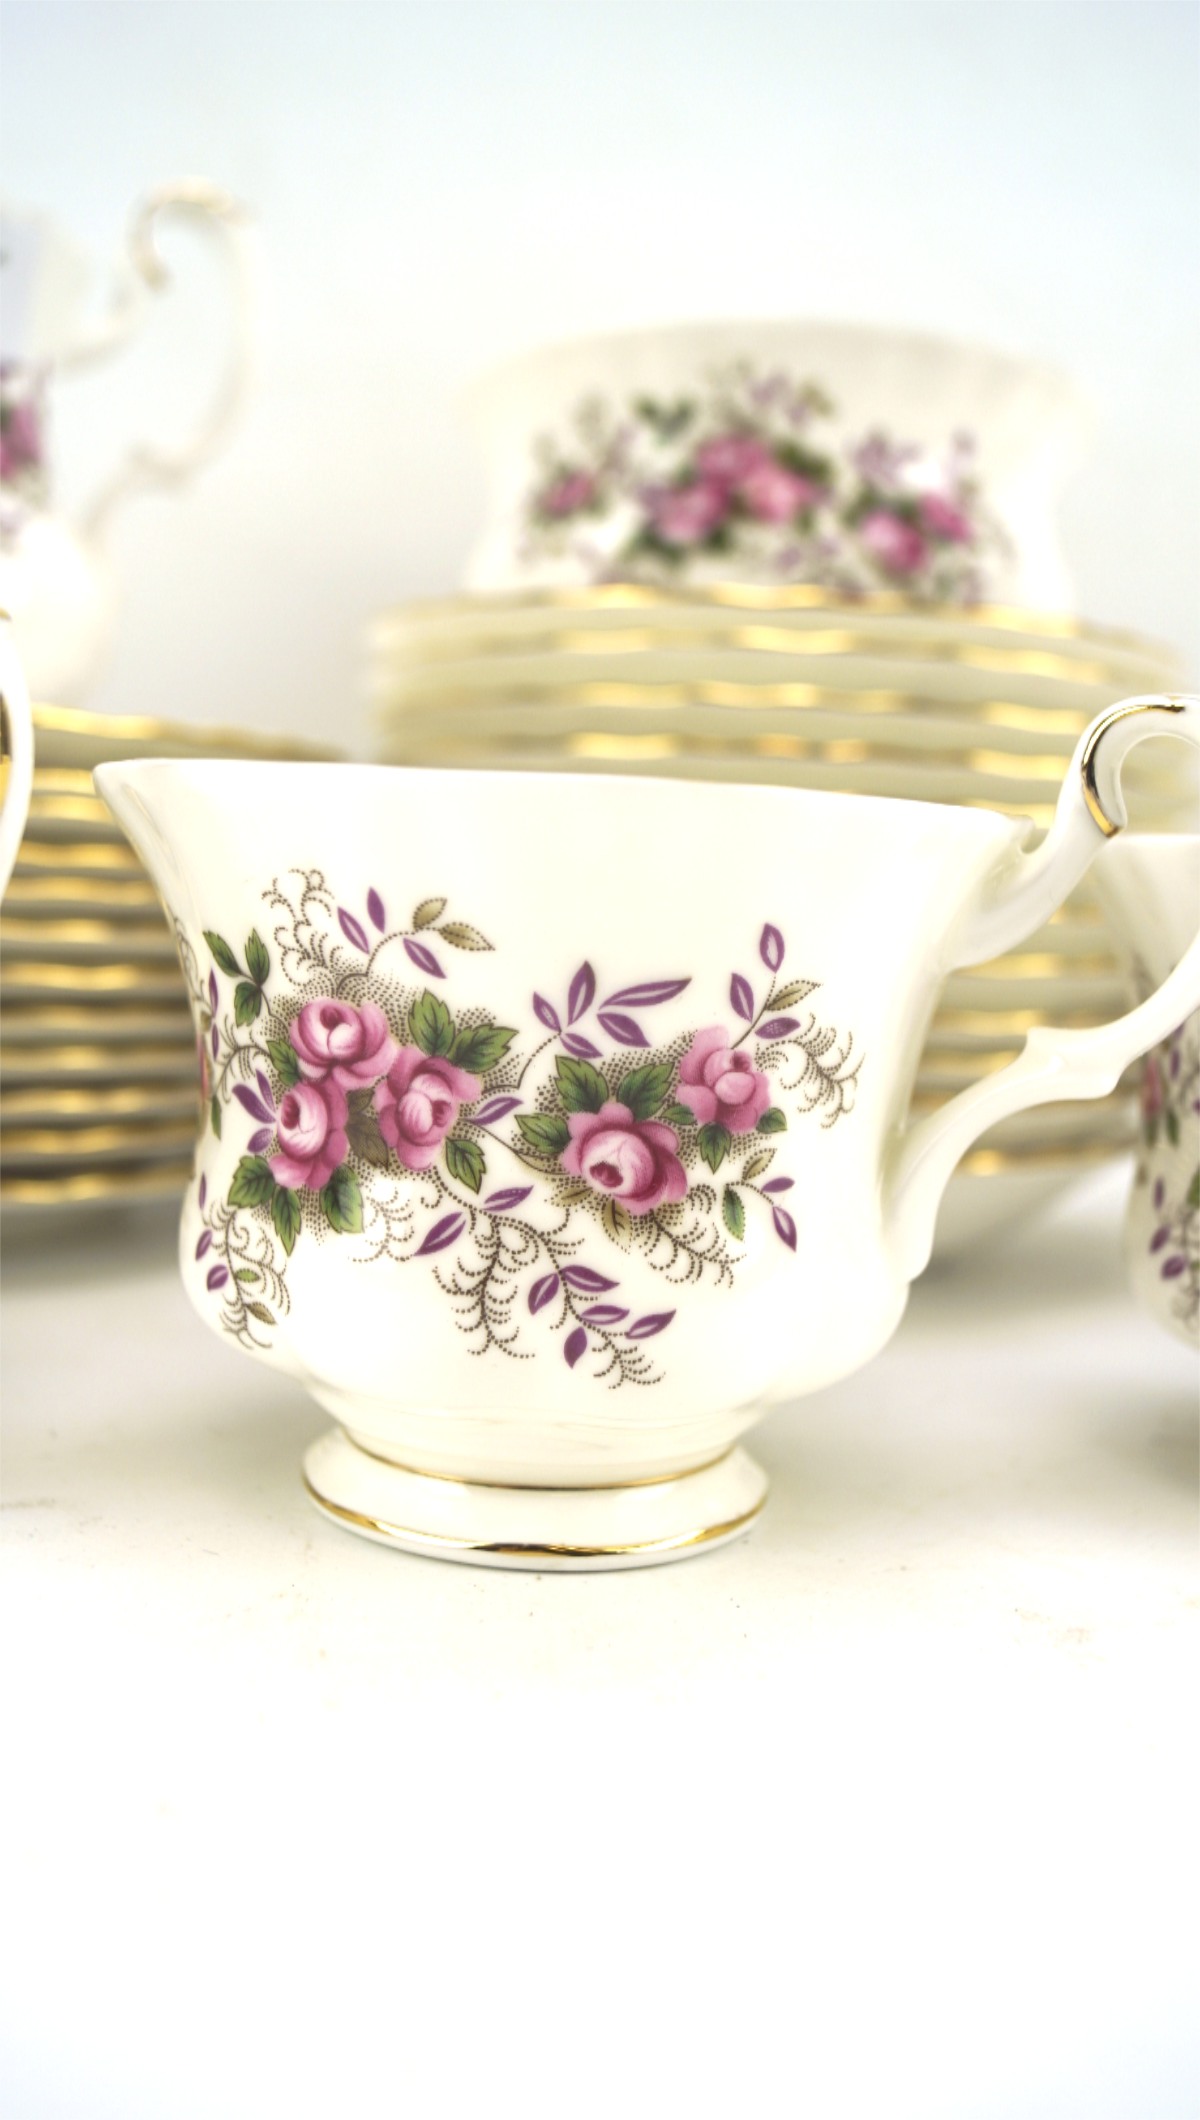 A Royal Albert 'Lavender Rose' pattern part tea set, including tea cups, saucers, side plates, - Image 2 of 3